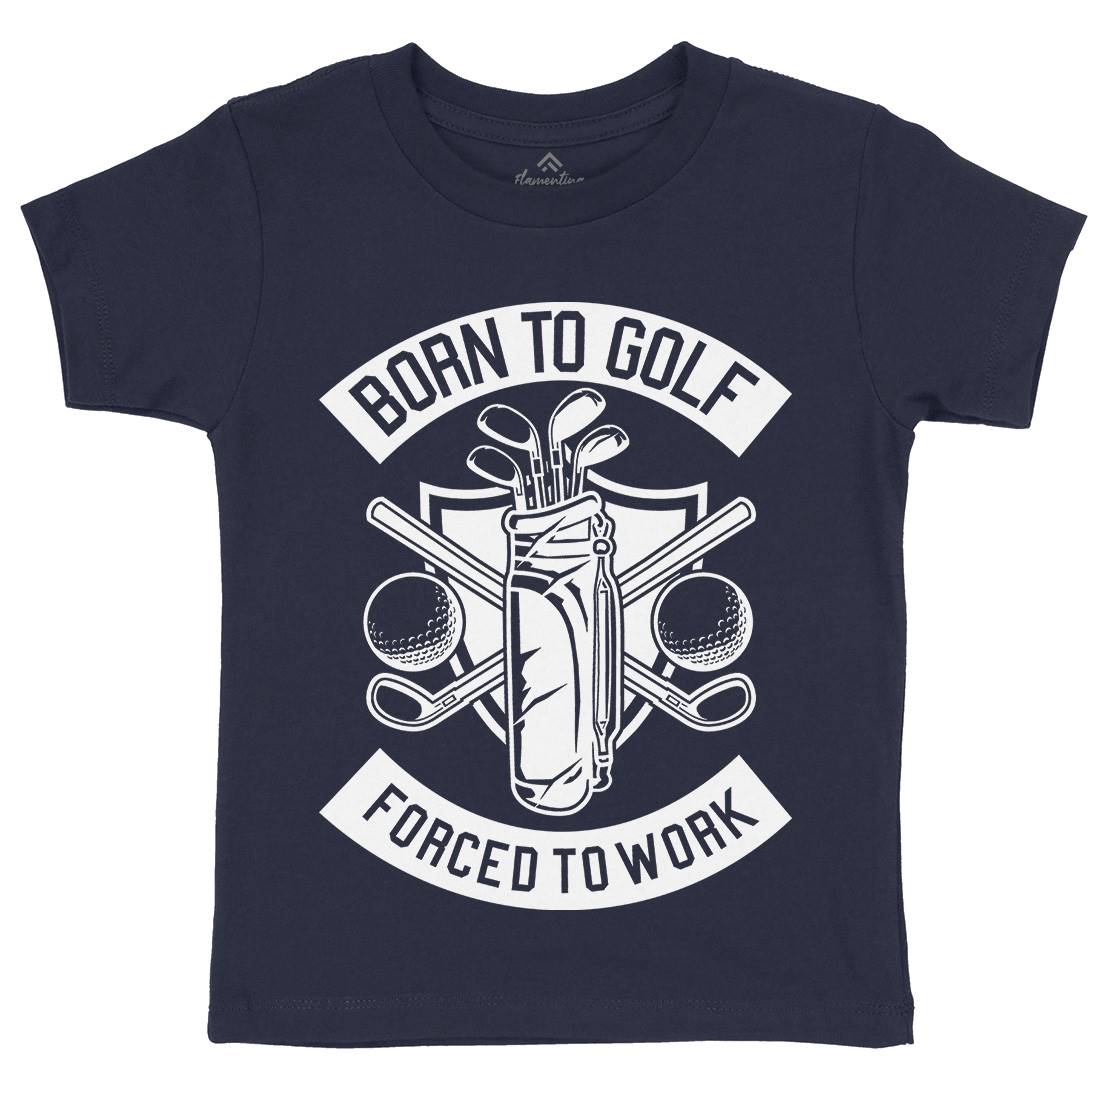 Born To Golf Kids Crew Neck T-Shirt Sport B504